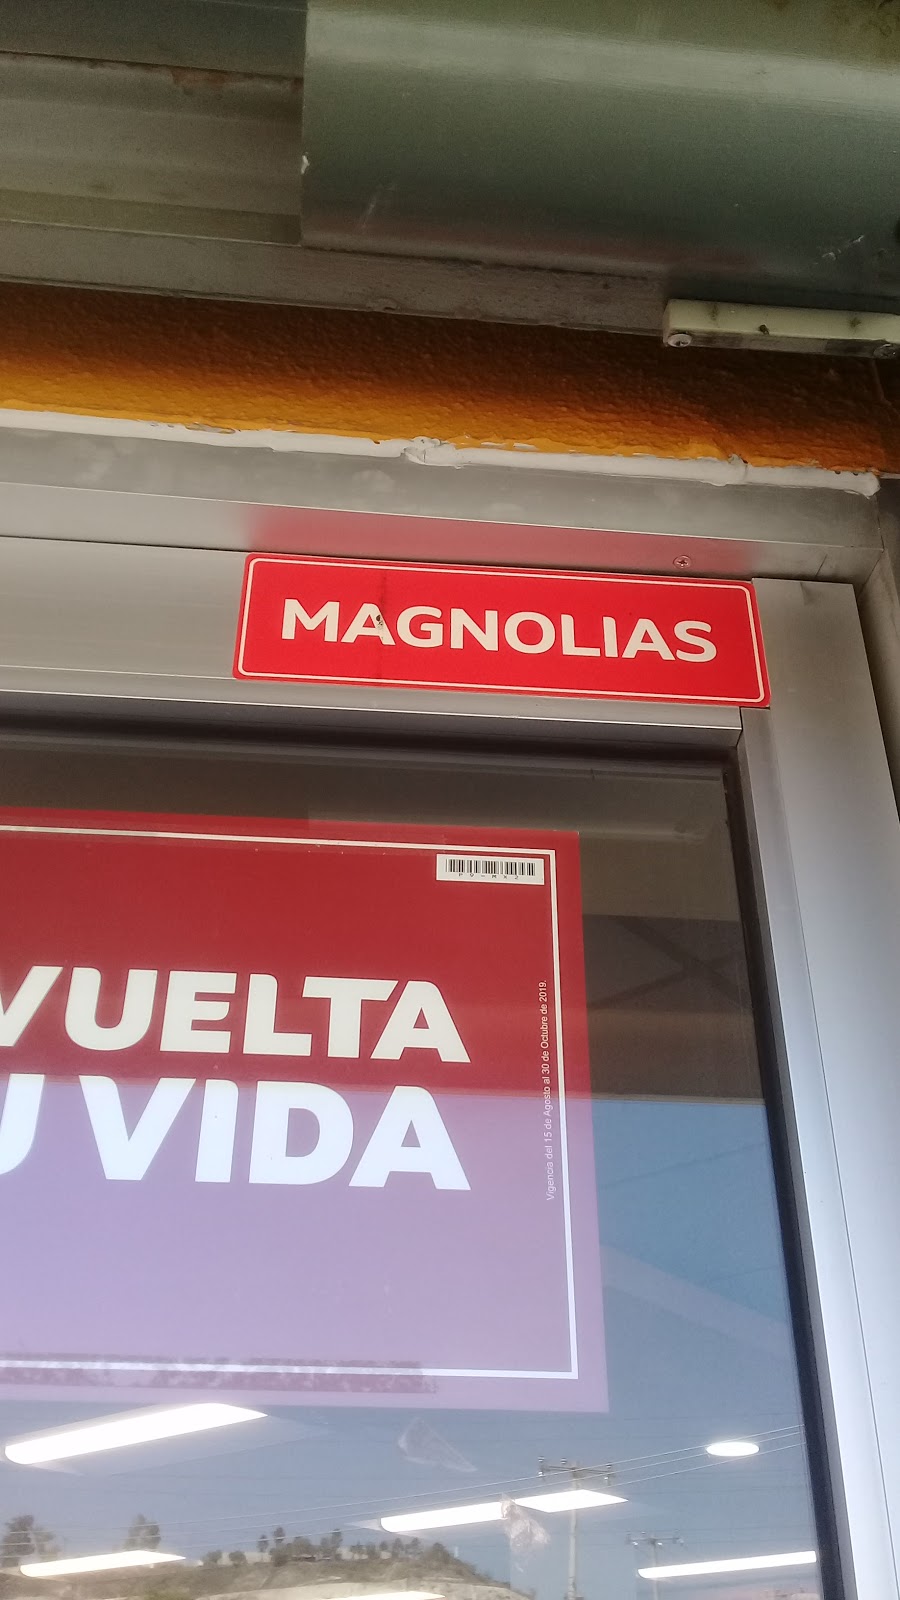 OXXO magnolias | Av. Magnolias 26251, Lomas Del Refugio, El Refugio, 22253 Tijuana, B.C., Mexico | Phone: 81 8320 2020